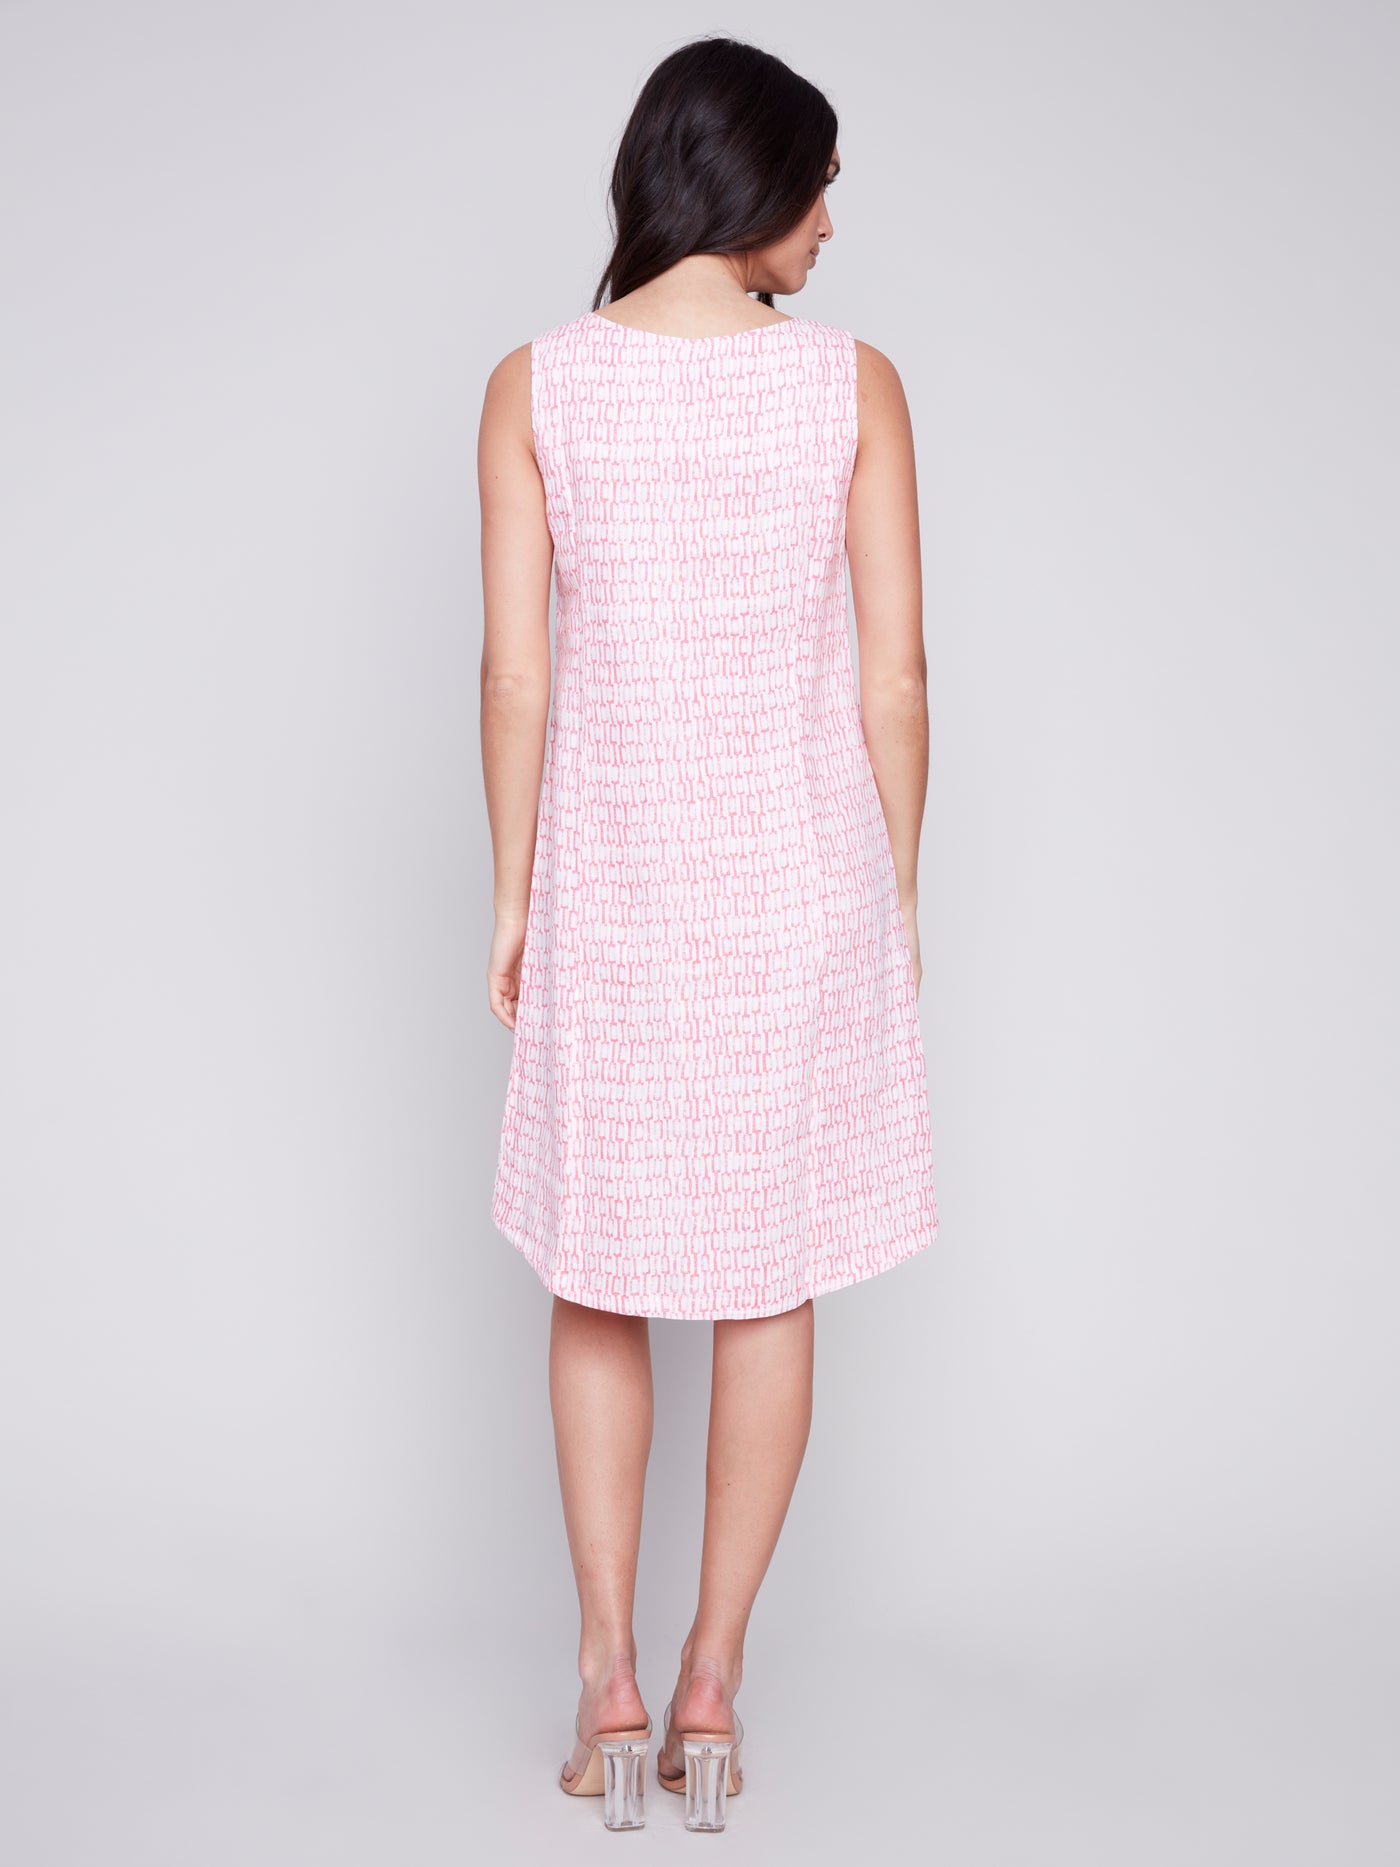 Charlie B Dress - Linen Print - Flamingo